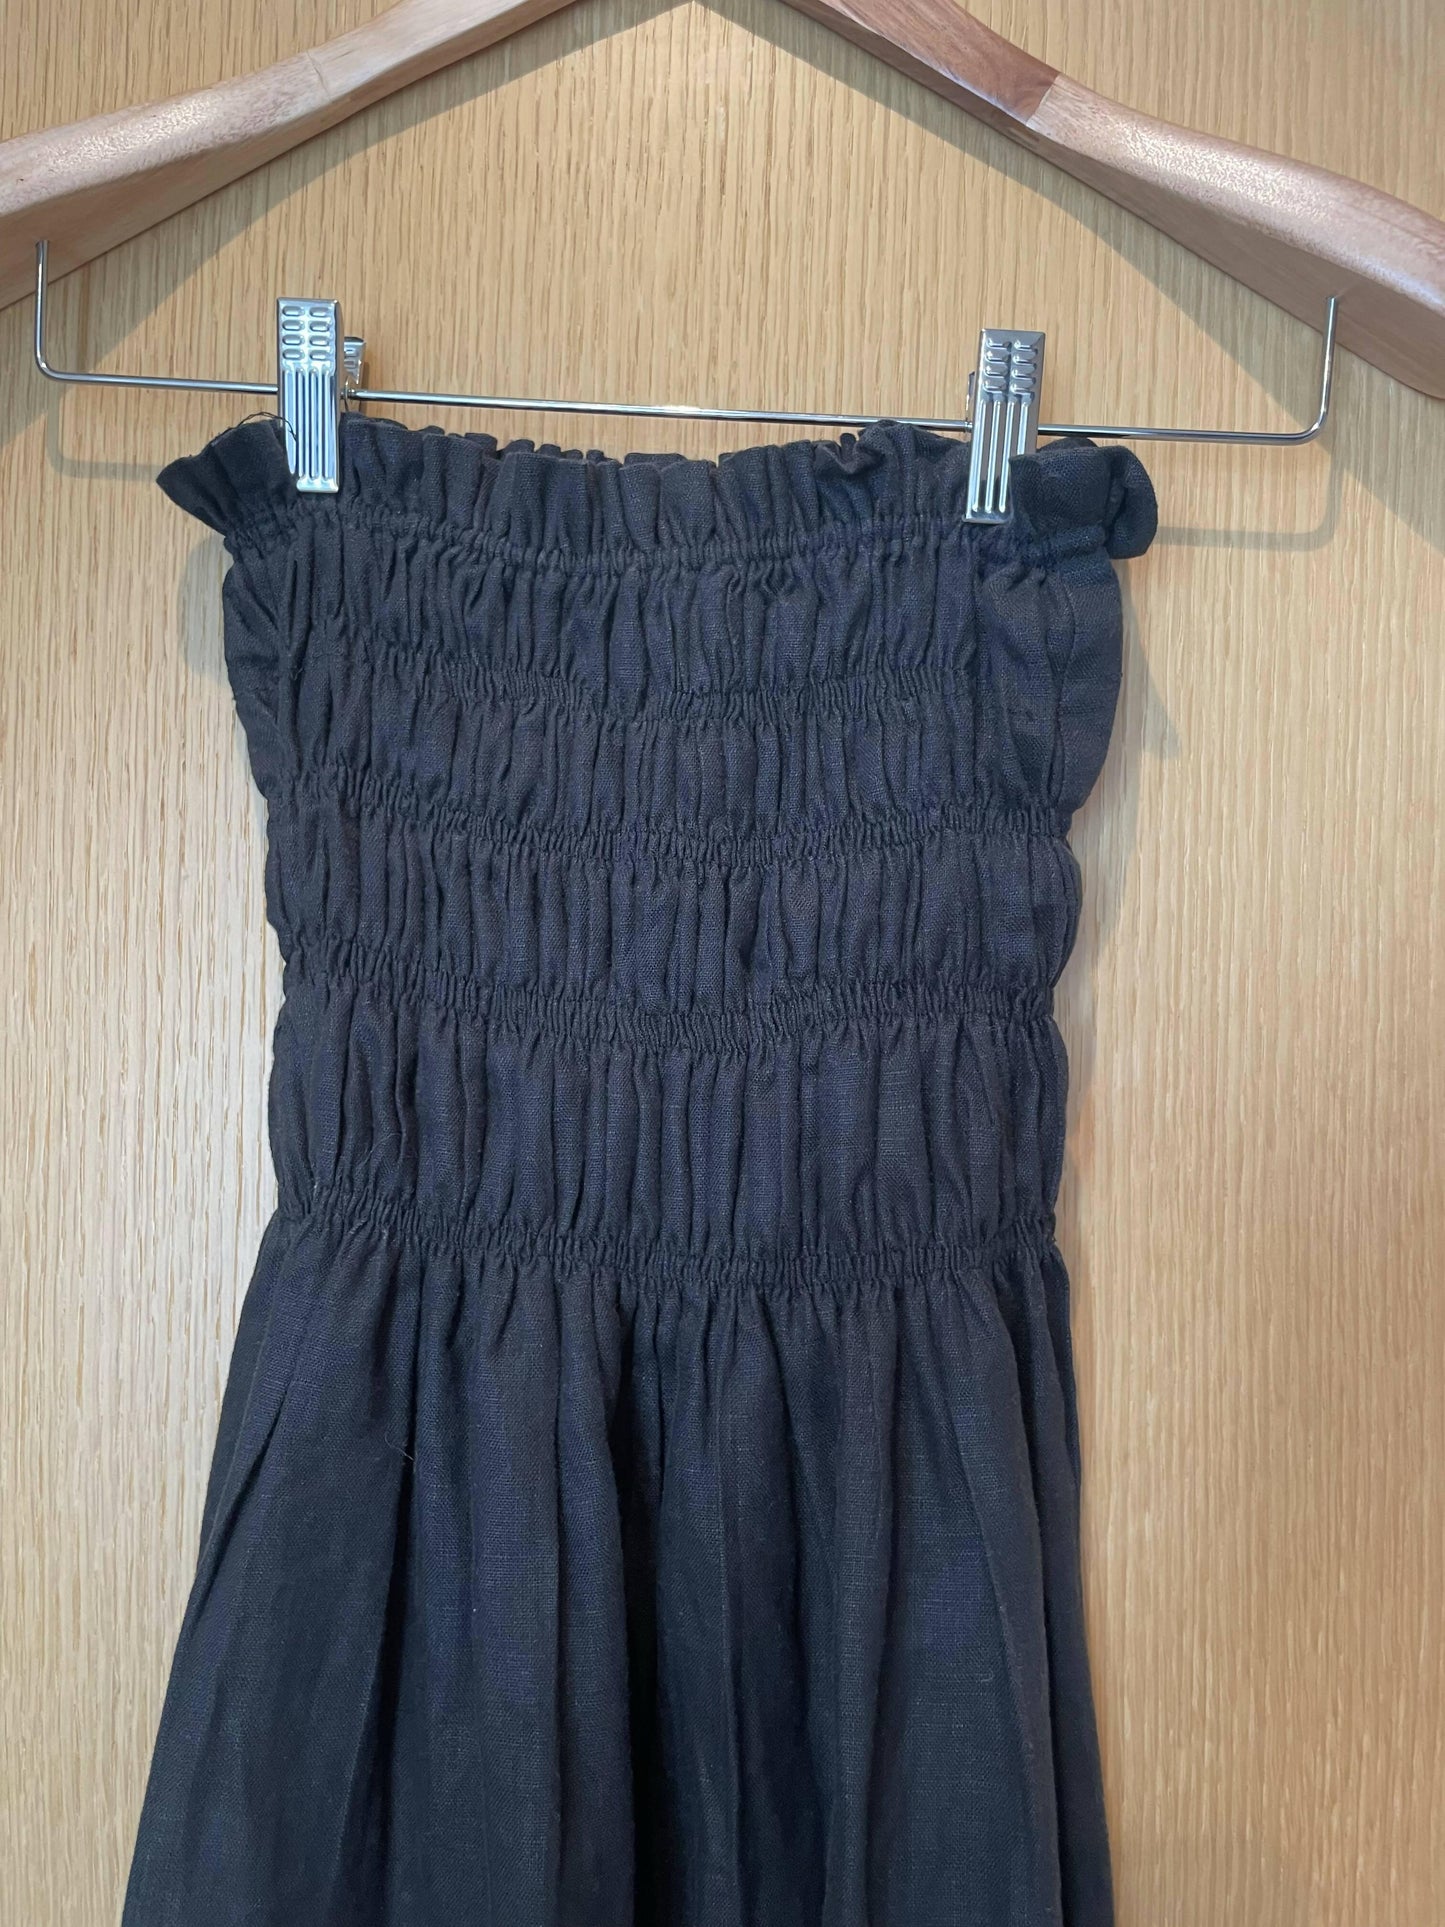 Strapless Black Linen Midi dress - Endless